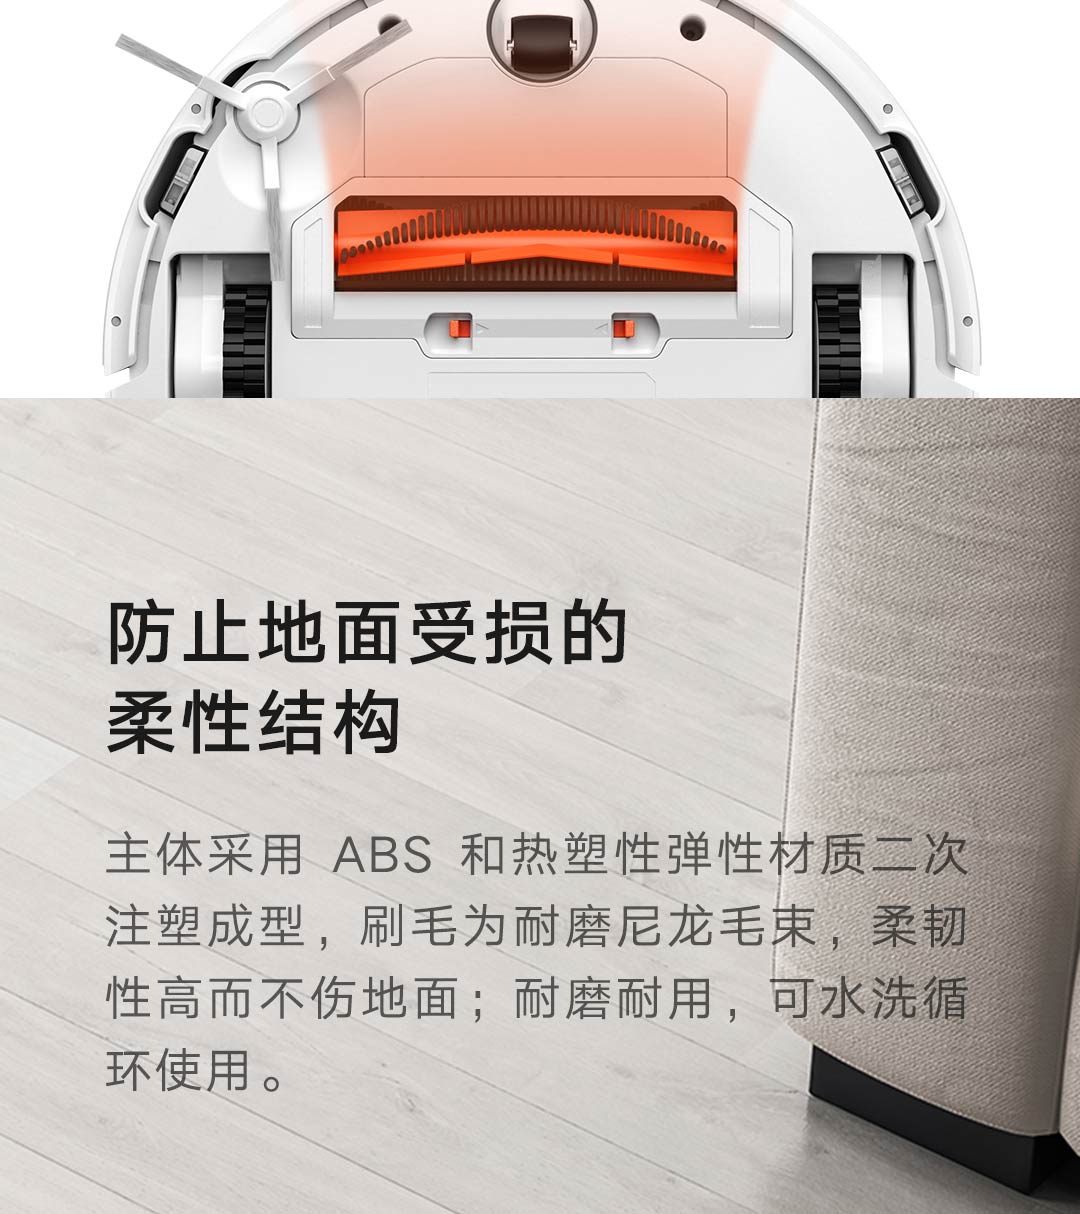 product_奇妙_米家扫拖机器人-LDS激光导航版配件